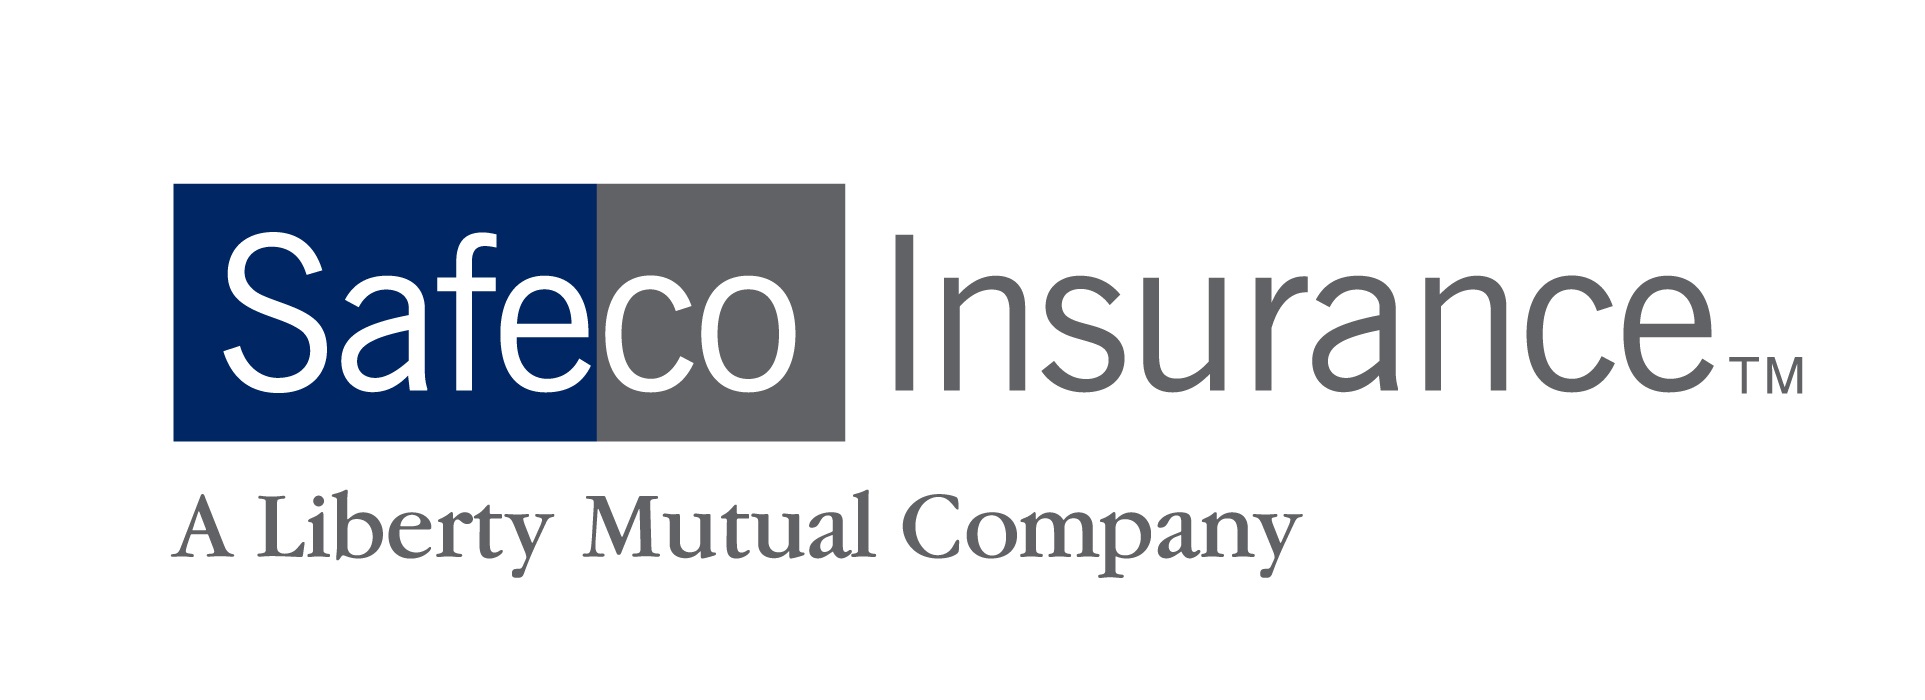 Safeco Insurance - A proud Partner of Lifelong Insurance